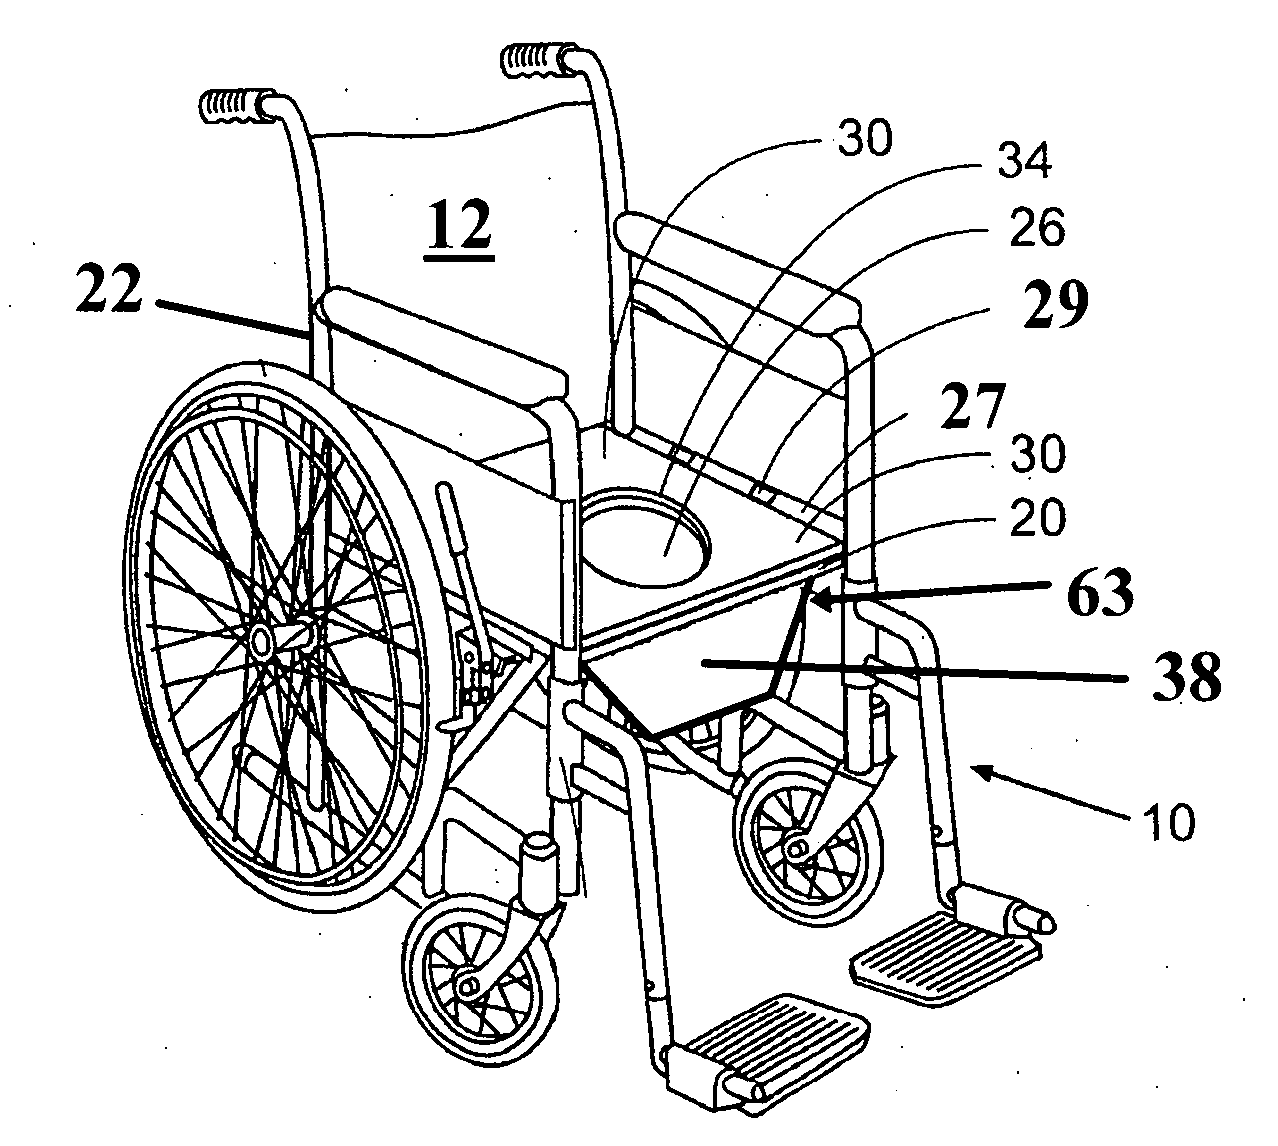 Waste handling apparatus for wheelchair